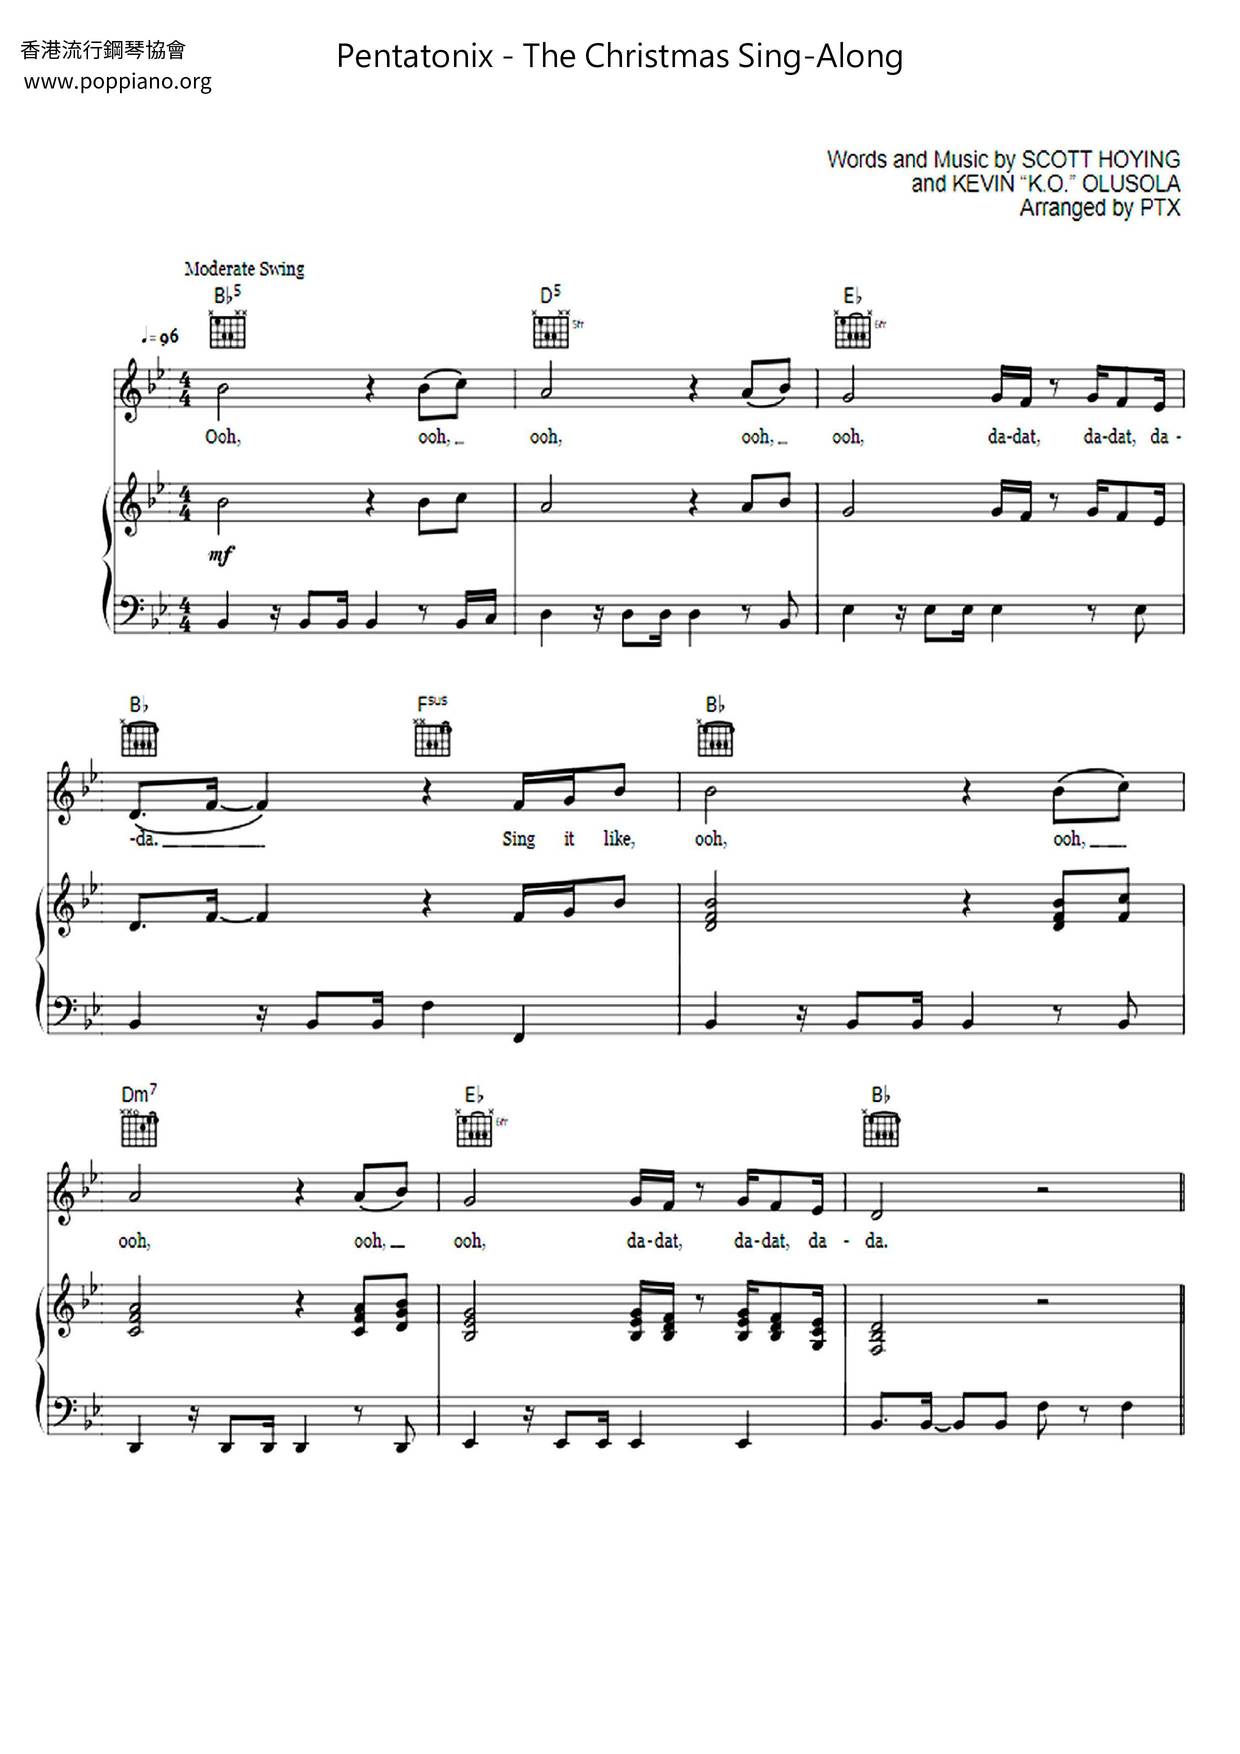 The Christmas Sing-Along Score